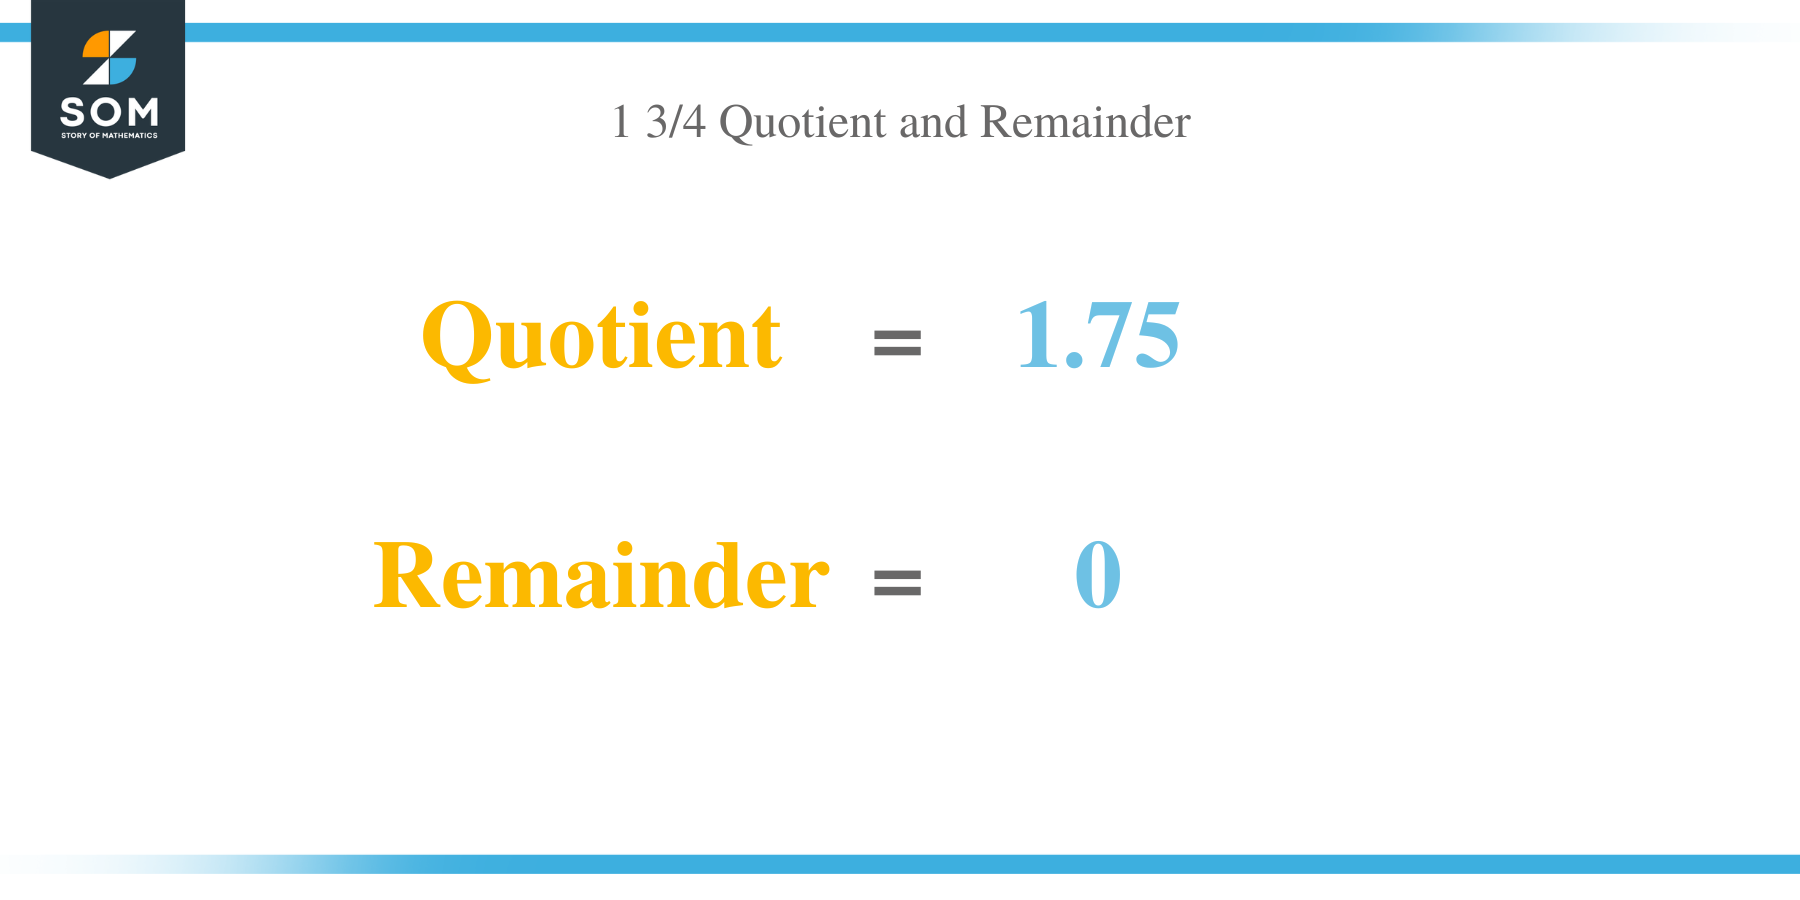 Quotient and remainder of 1 3 per 4